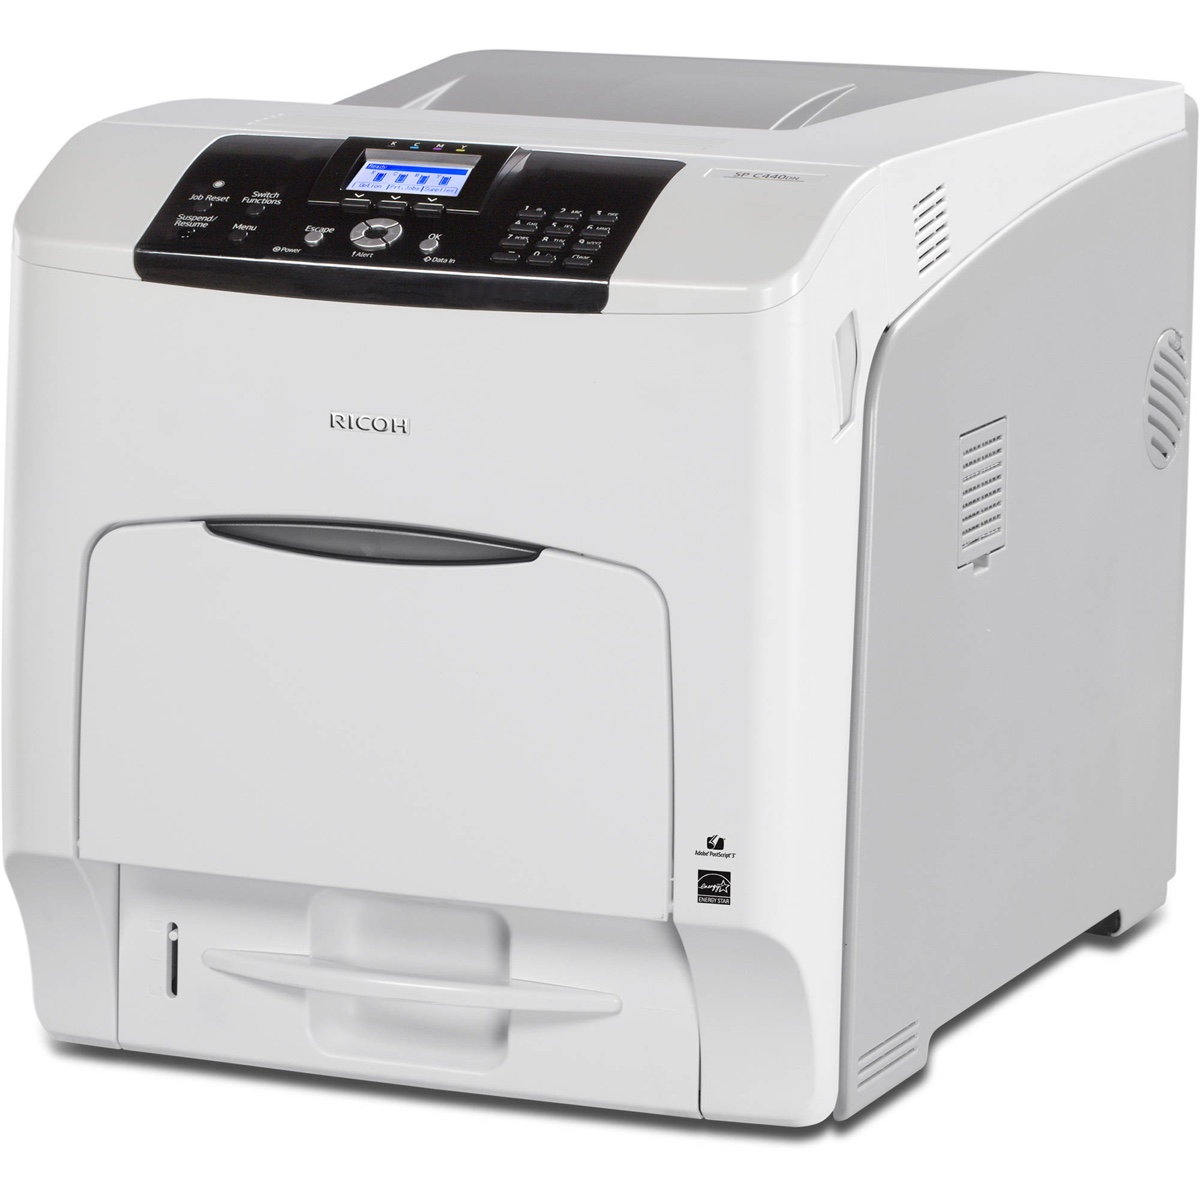 Ricoh Printers:  The Ricoh SP C440DN Printer